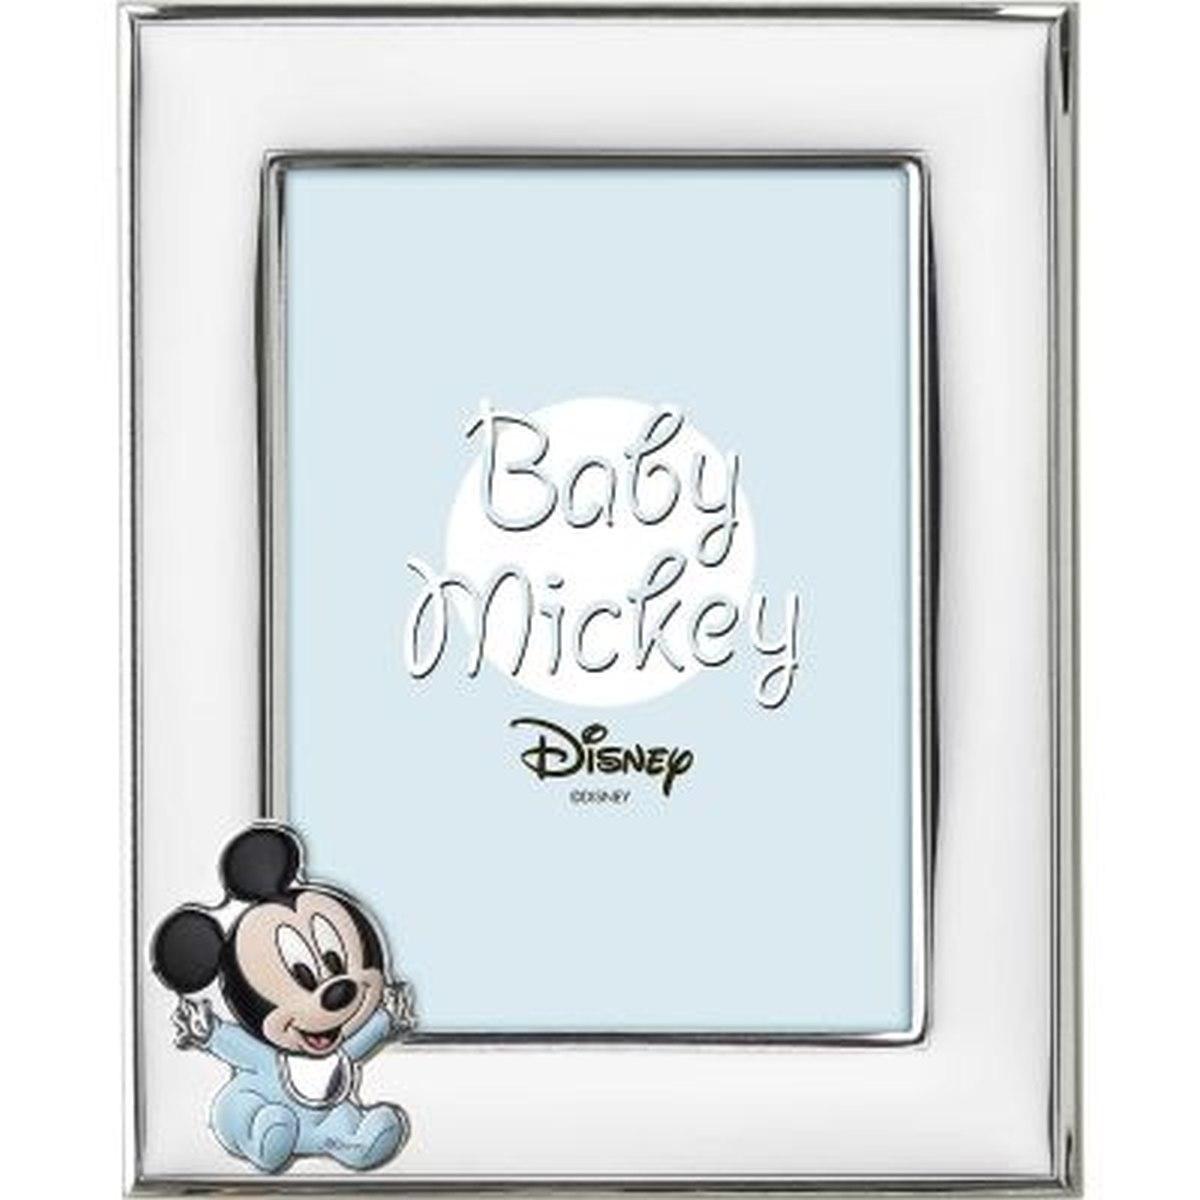 Cornice portafoto 9x13 cm Baby Mickey mouse celeste Valenti